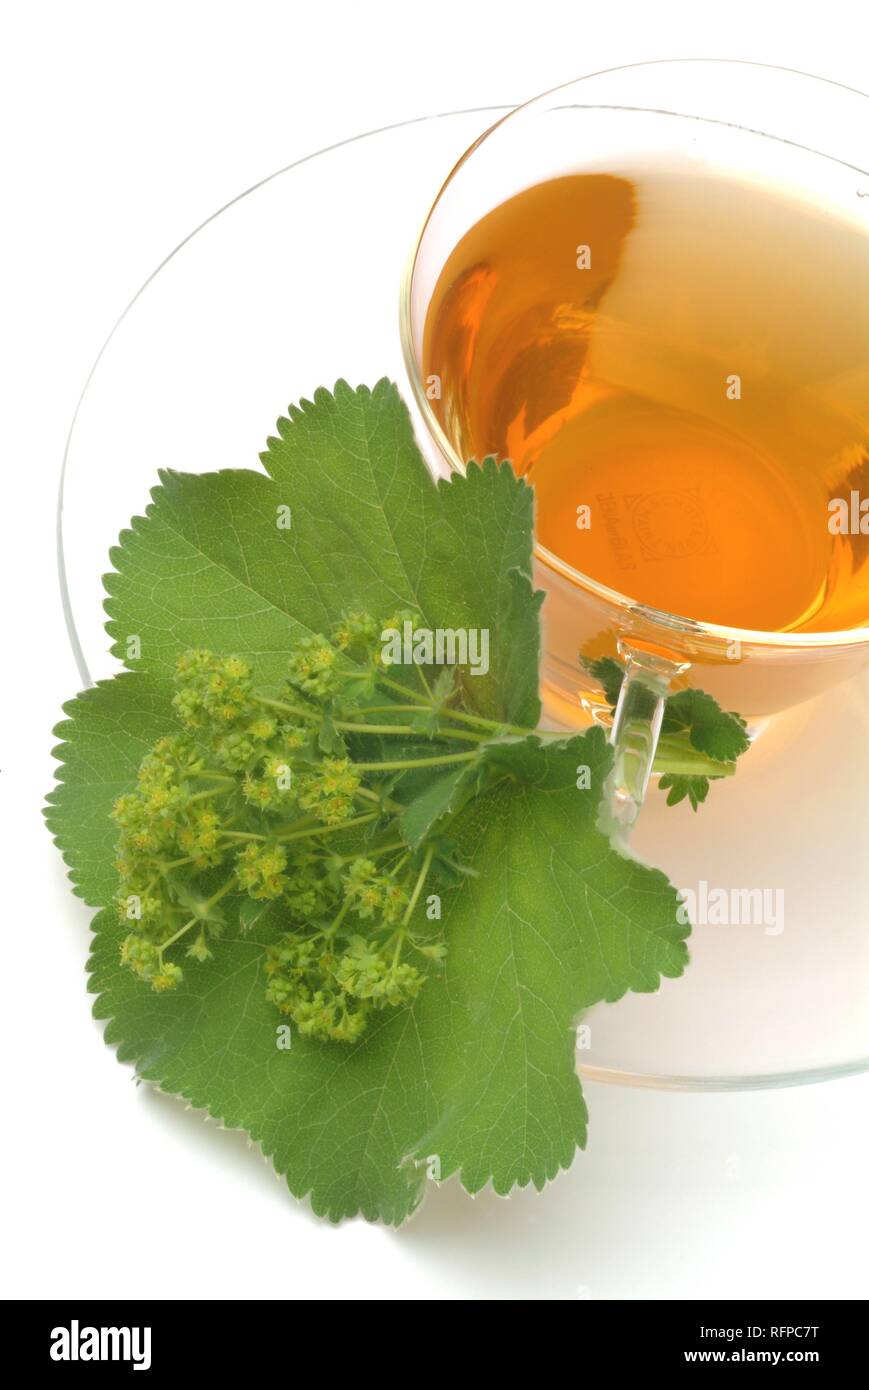 Herb tea made of Alchemilla vulgaris, Lady's mantle Stock Photo